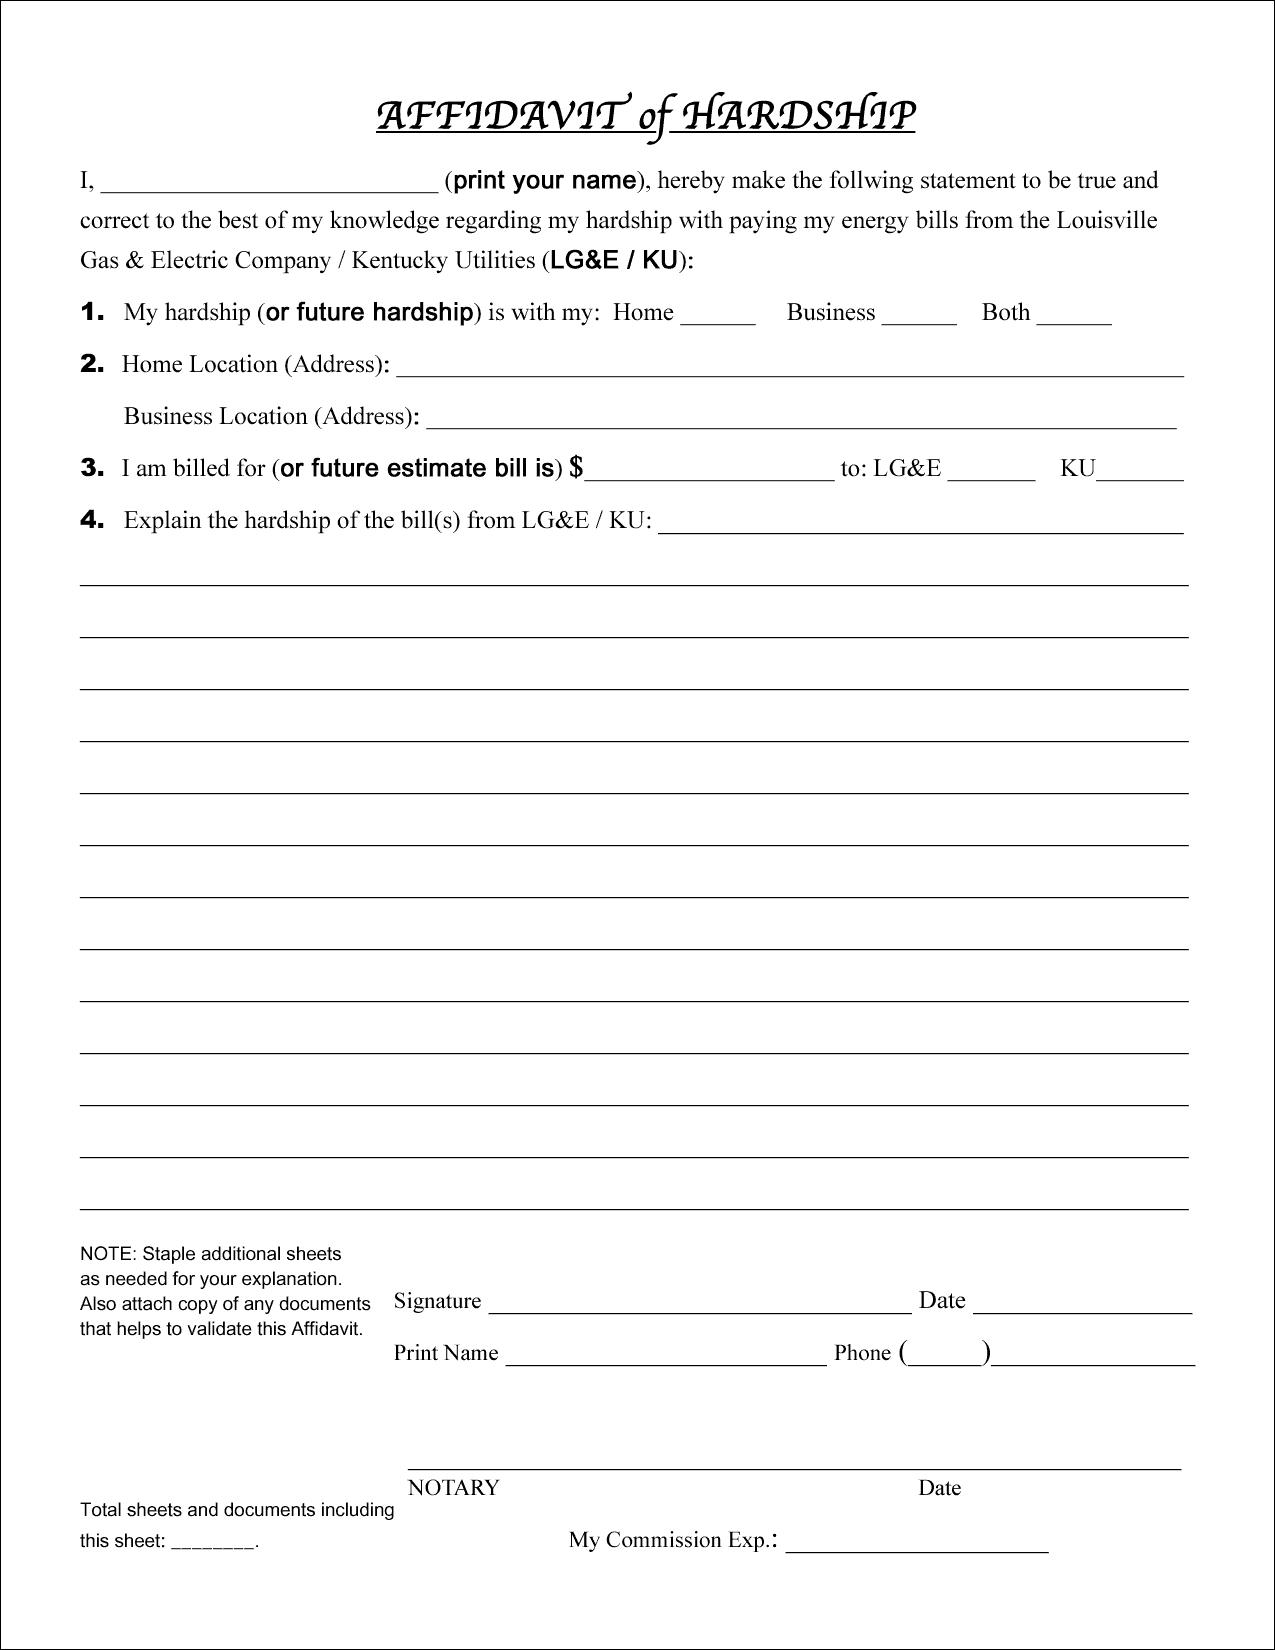 33-free-affidavit-form-templates-in-word-excel-pdf